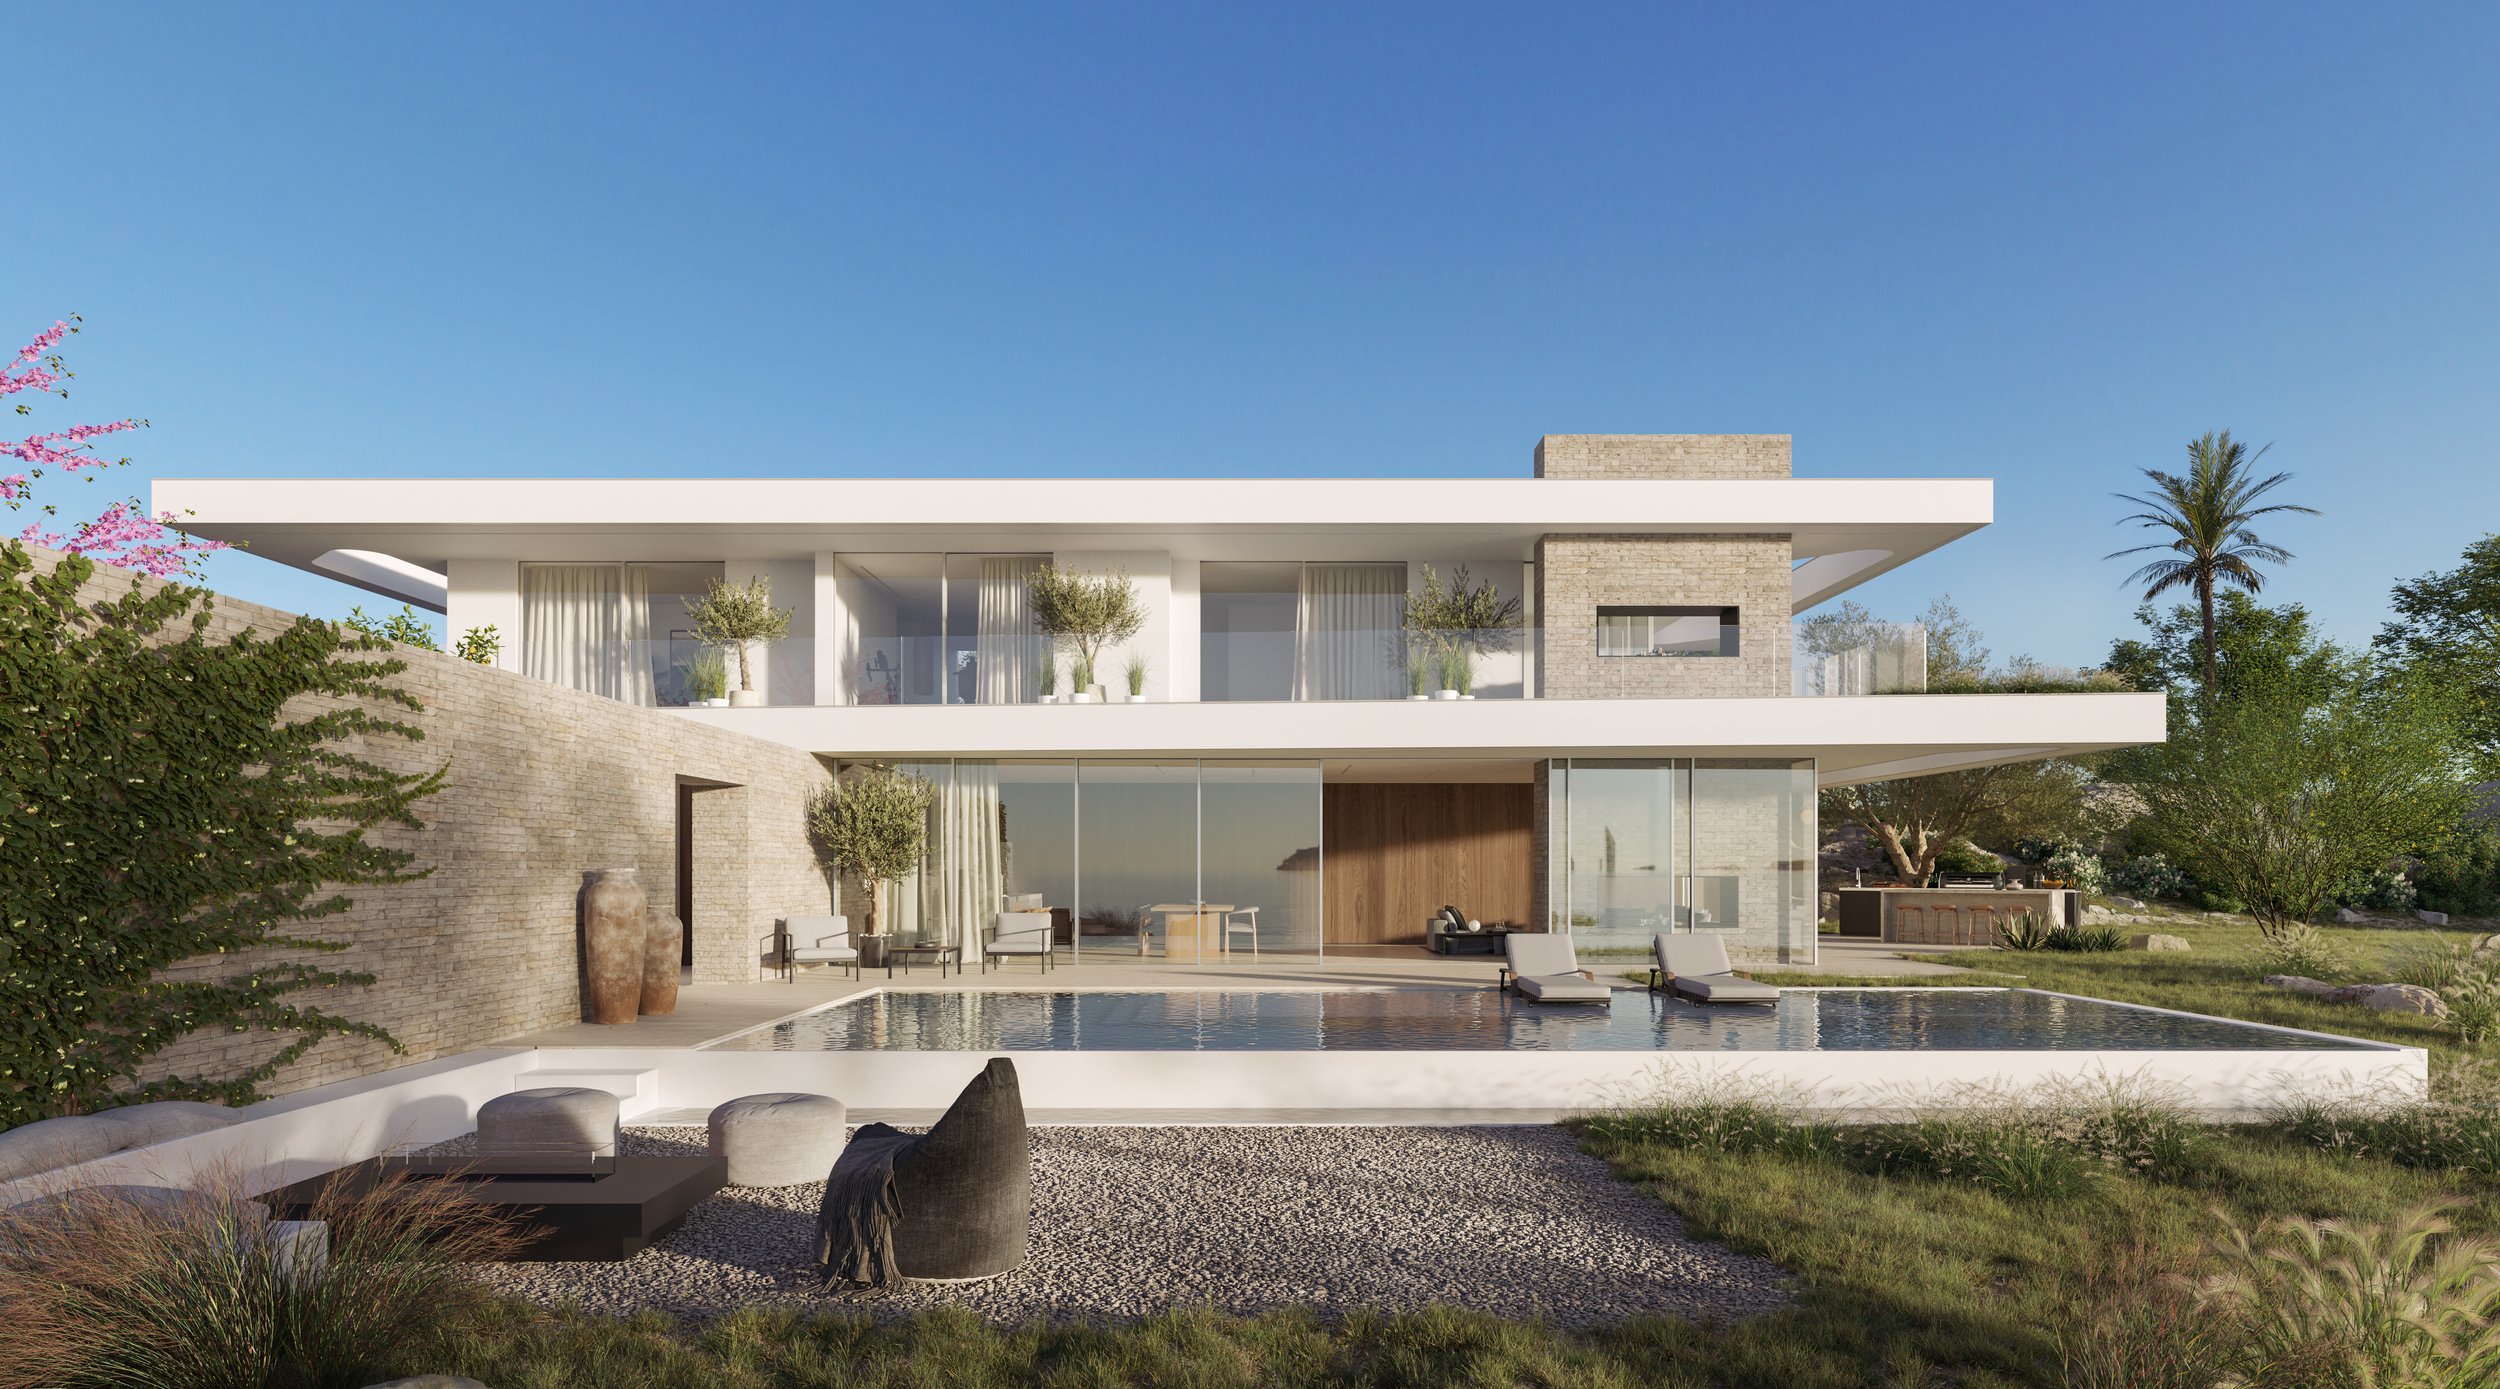 Los Angeles Home Design | Residential Home Design Firm — bspk